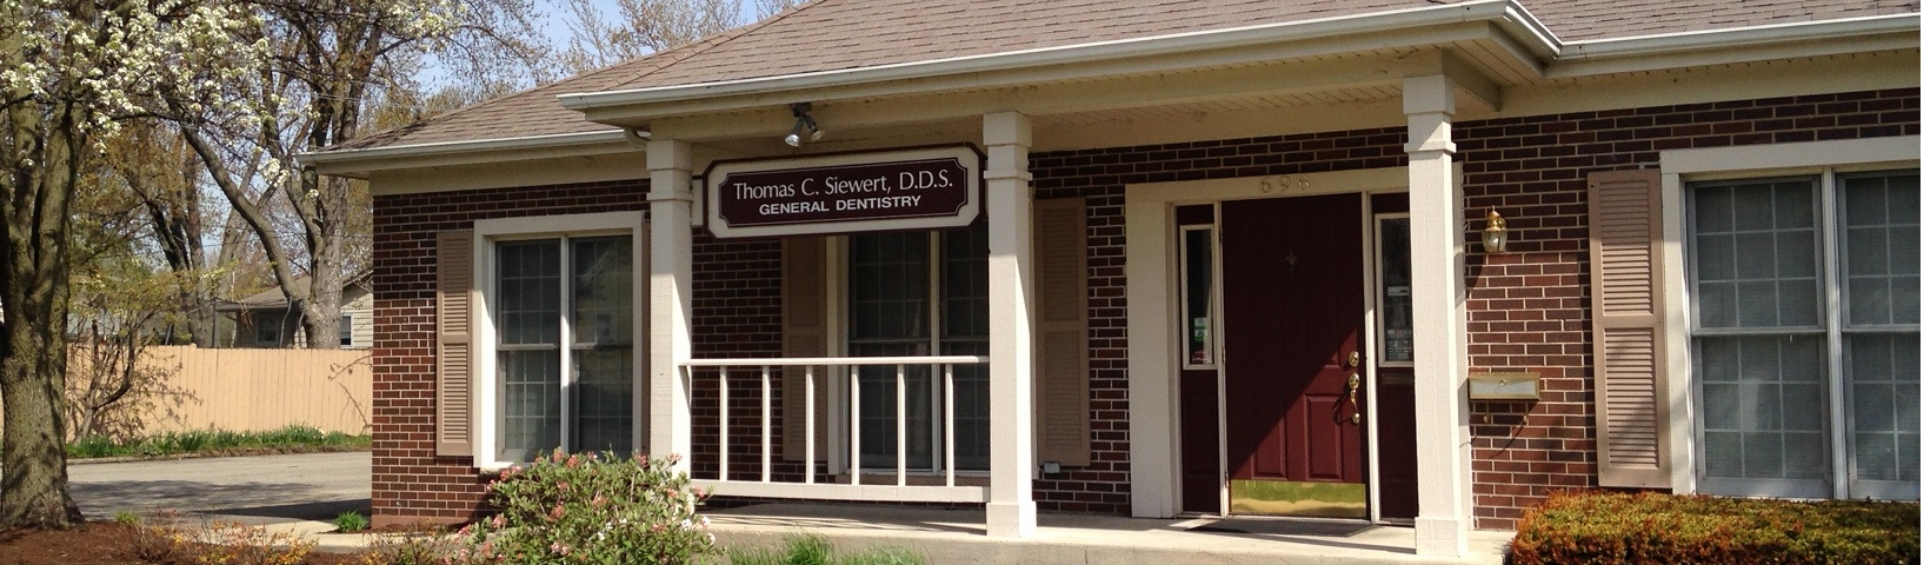 Exterior of South Elgin dental office